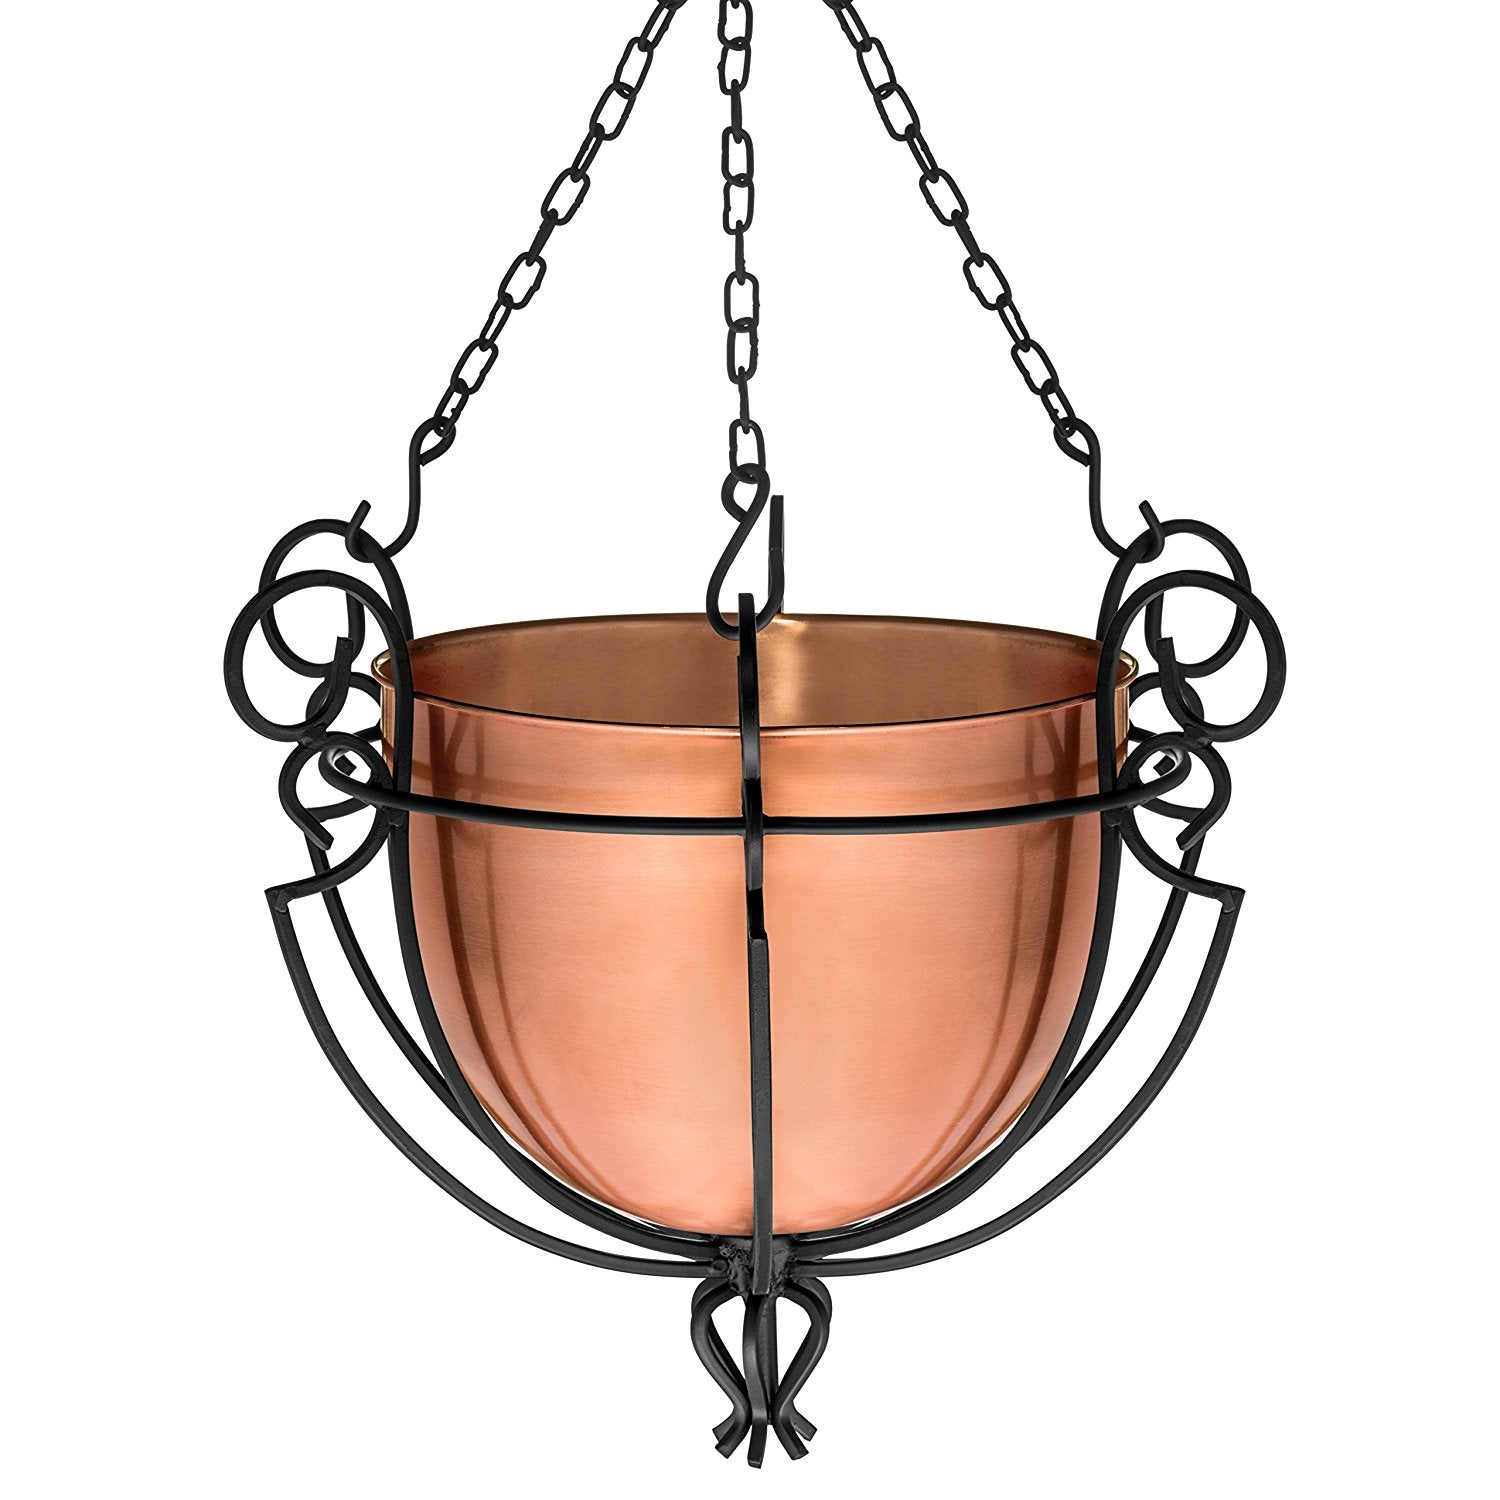 H Potter Hanging Planter Basket for Garden, Patio, Decks